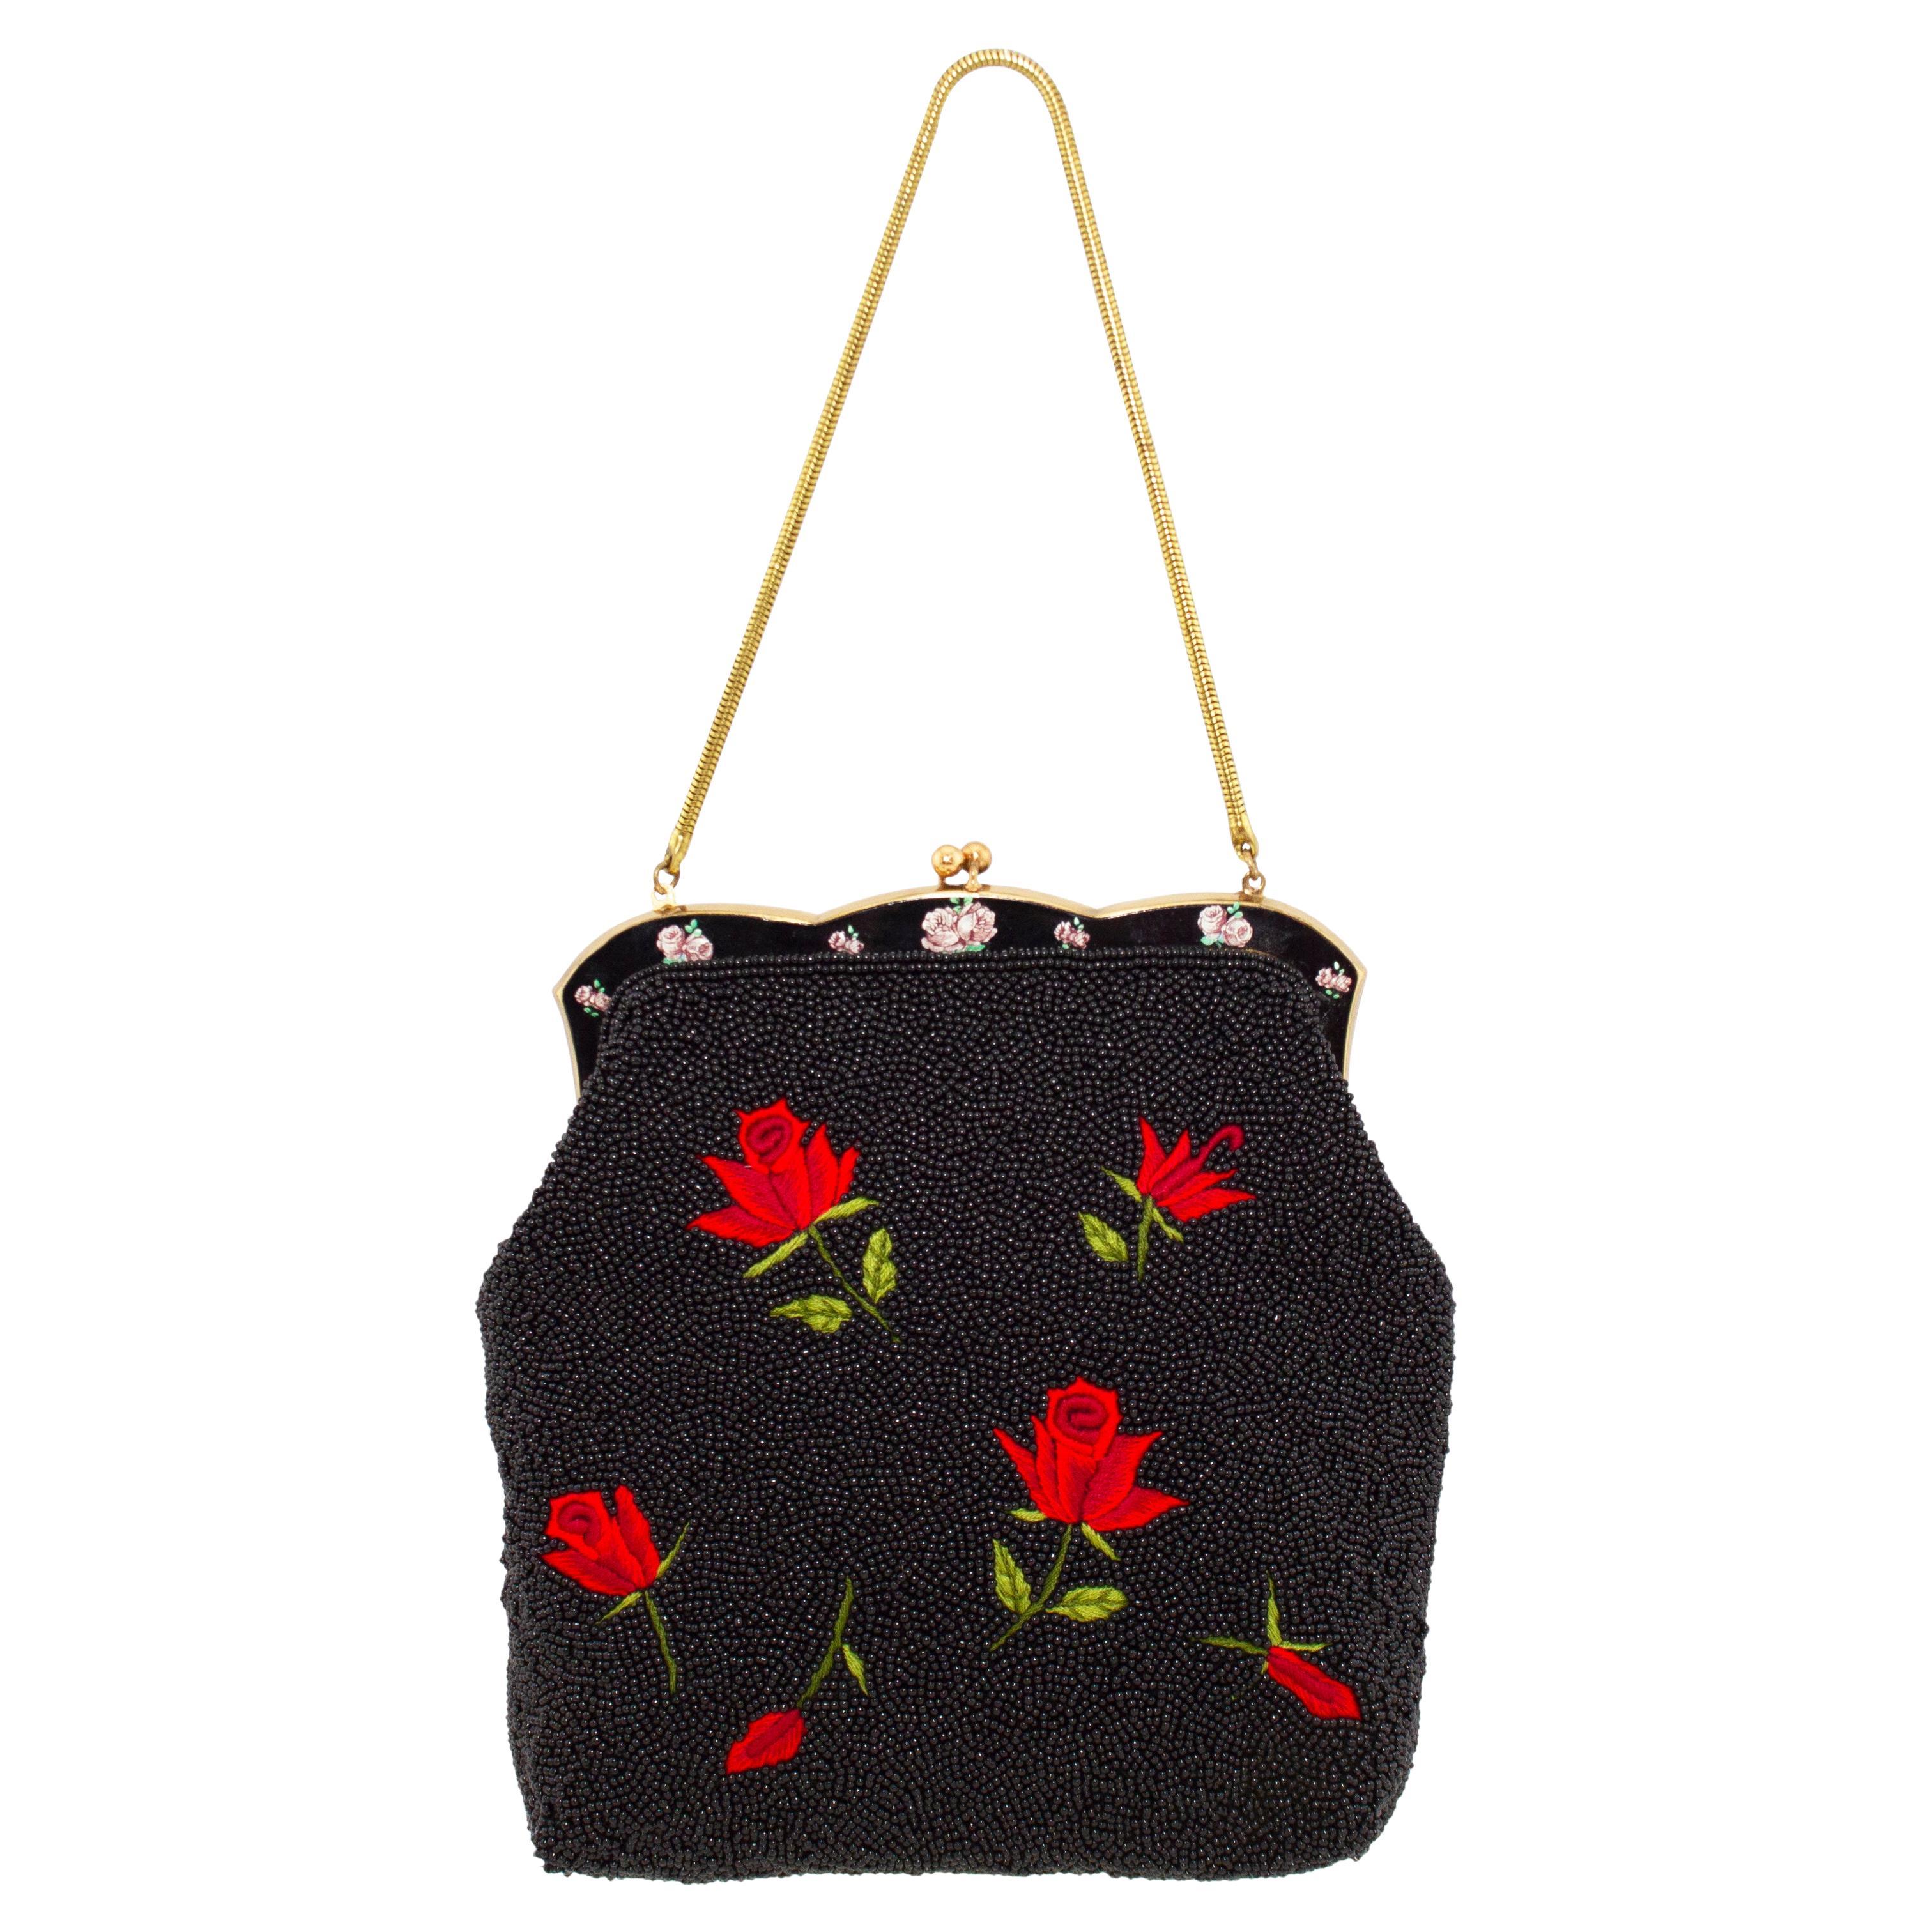 Chanel Jumbo nylon shopper Tot bag with Lip Heart + Coco Grafitti 1985's  For Sale at 1stDibs